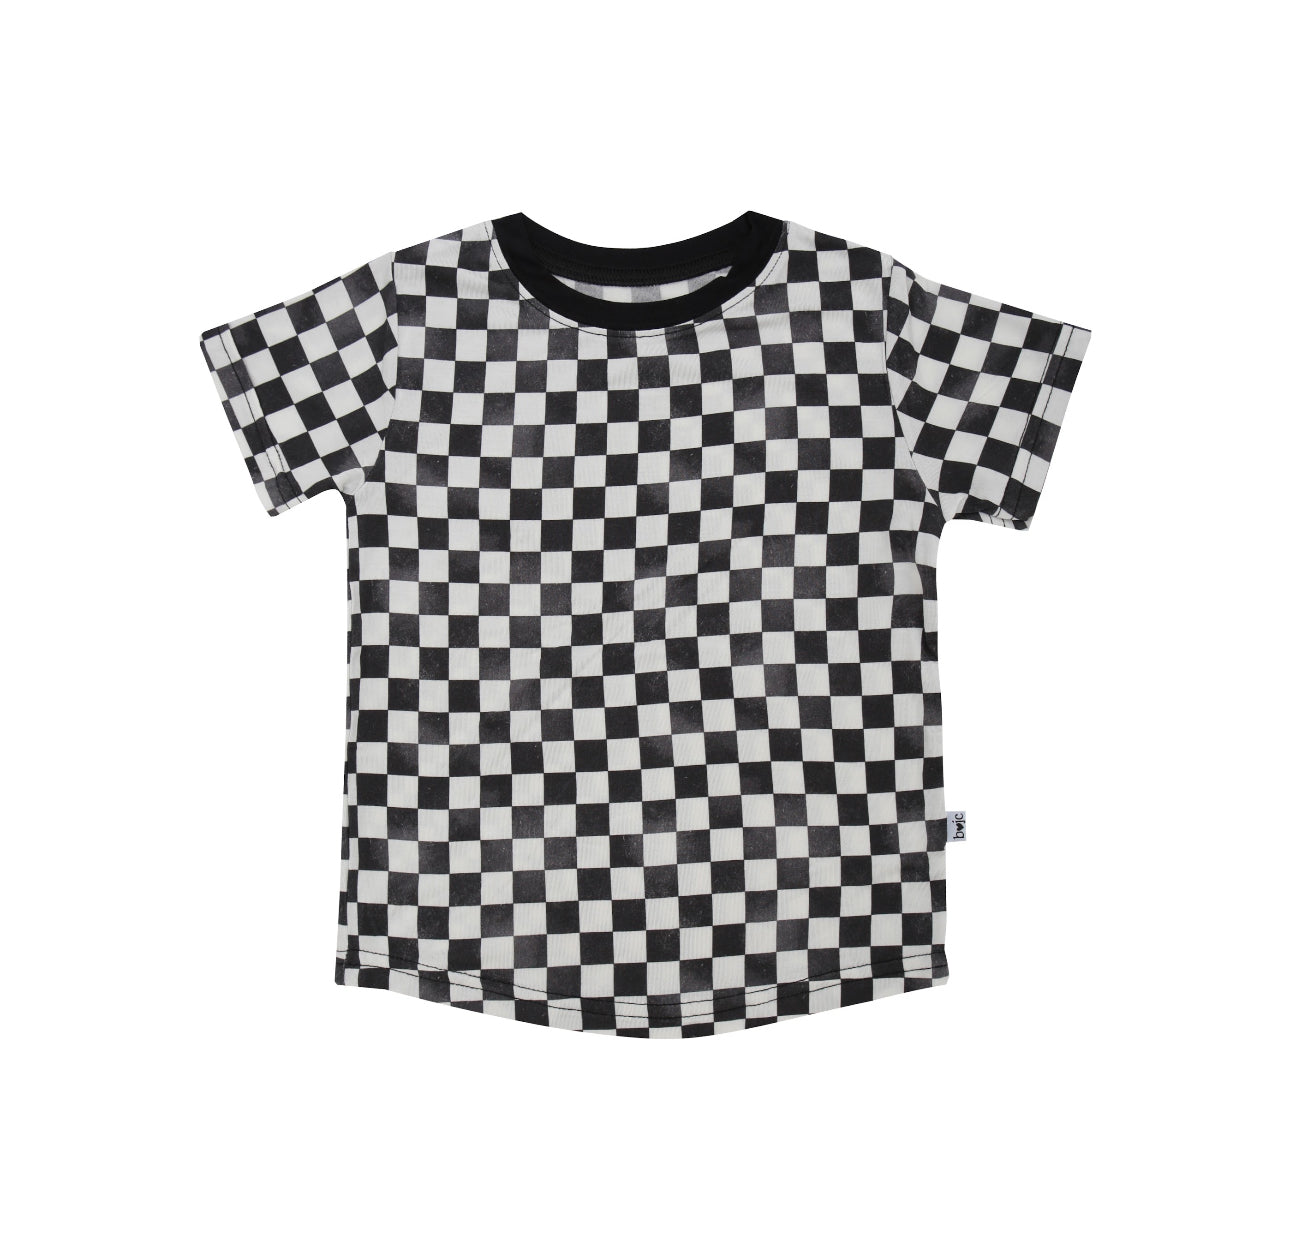 bamboo Distressed Checkered kids tee shirt